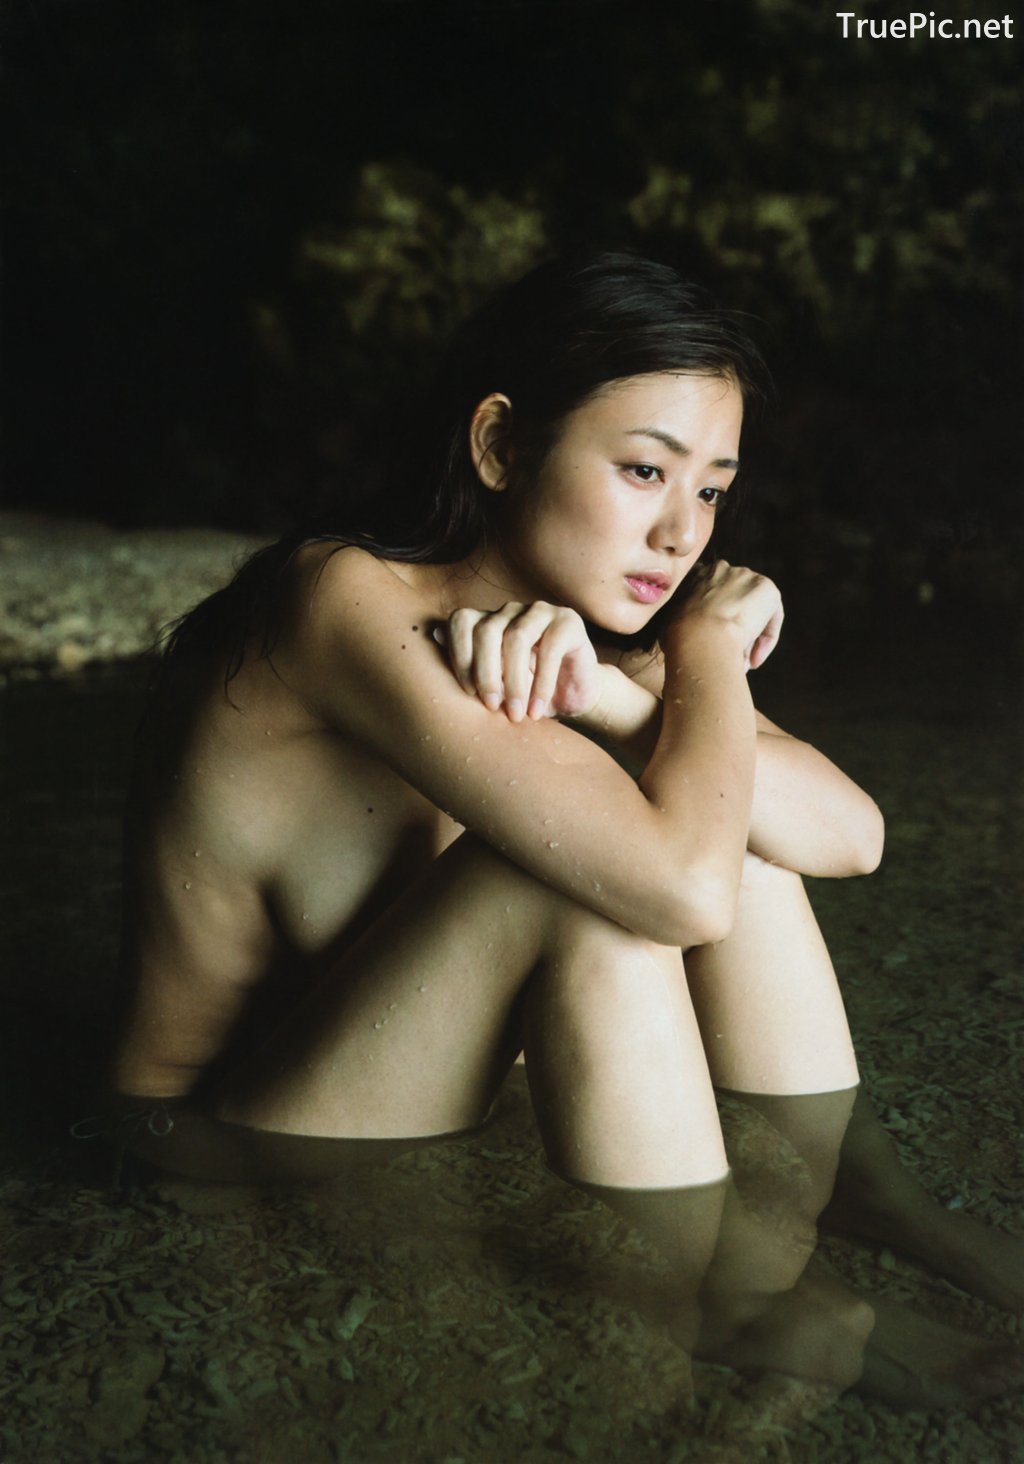 Image-Japanese-Actress-Gravure-Idol-Moemi-Katayama-Mermaid-From-Tokyo-Japan-TruePic.net- Picture-33